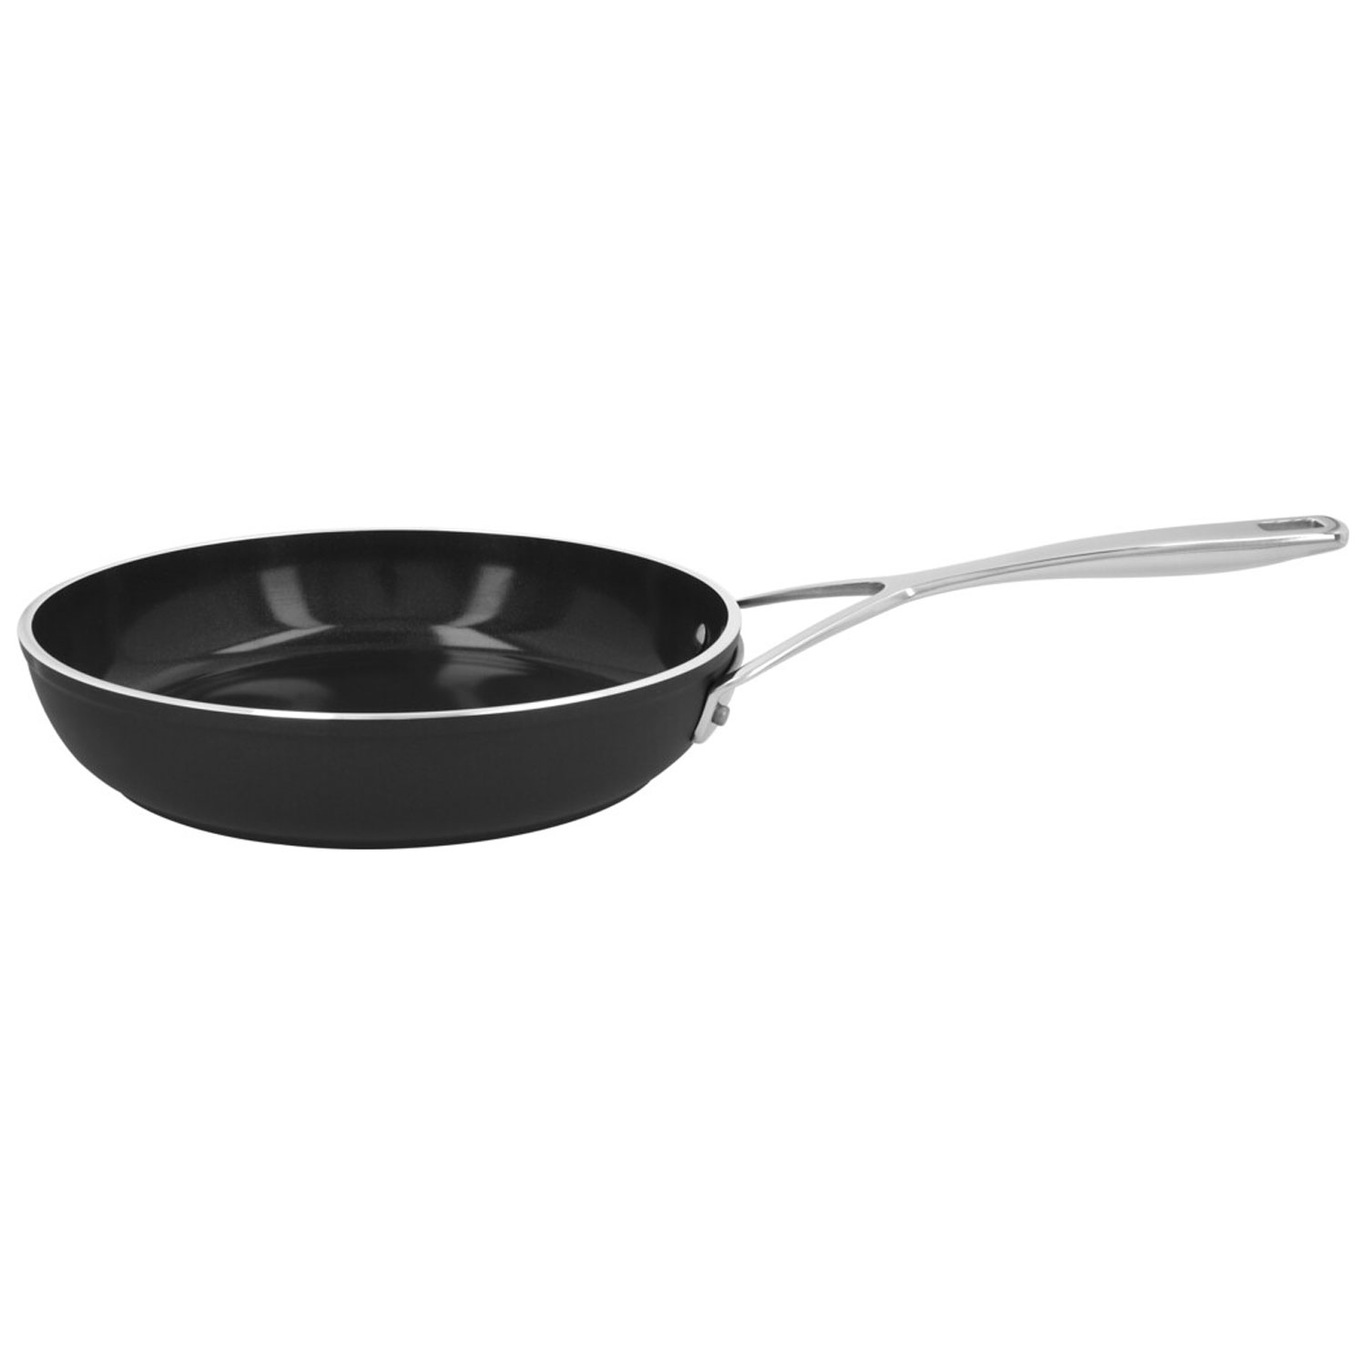 Alu Pro 5 Frying Pan, 24 cm